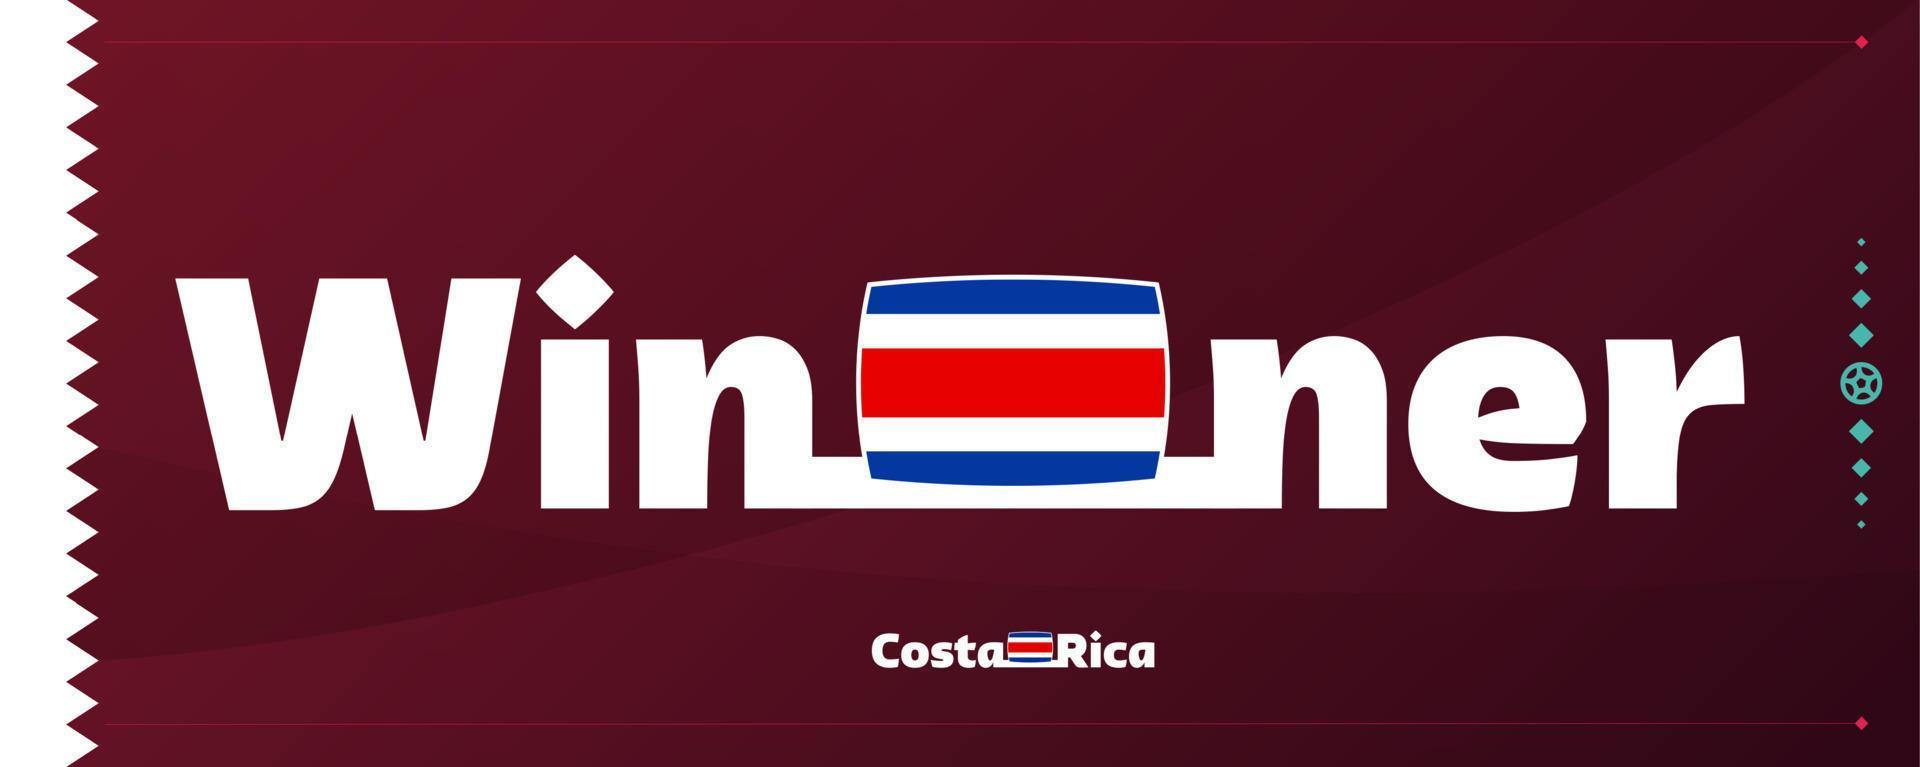 costa rica vlag met winnaar leuze Aan Amerikaans voetbal achtergrond. wereld Amerikaans voetbal 2022 toernooi vector illustratie